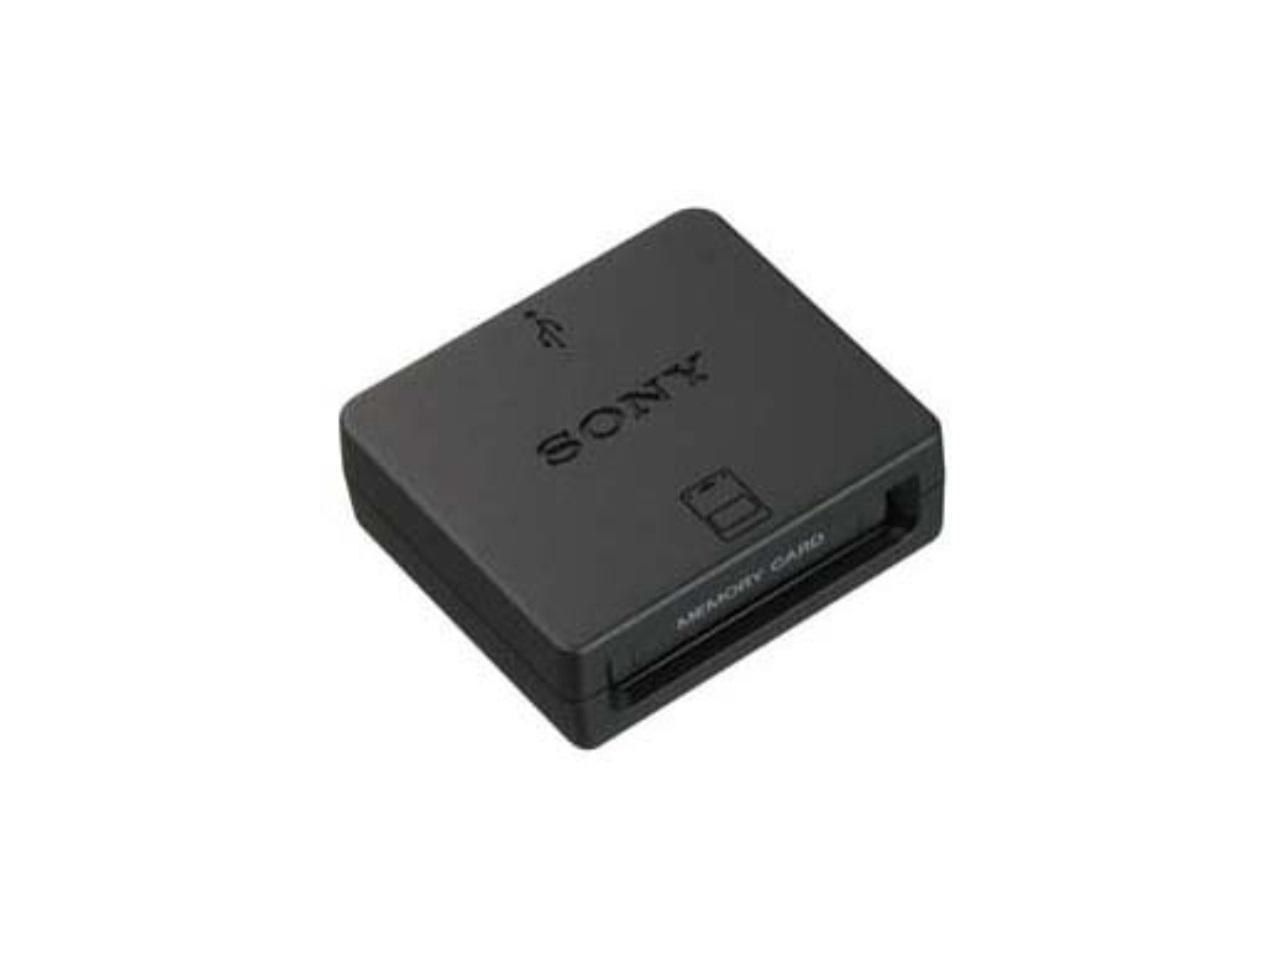 Playstation 3 флешка. Sony Memory Card Adapter ps2. Sony PLAYSTATION 2 карта памяти. Переходник на карту памяти ps2. Переходник для Sony PLAYSTATION 2.